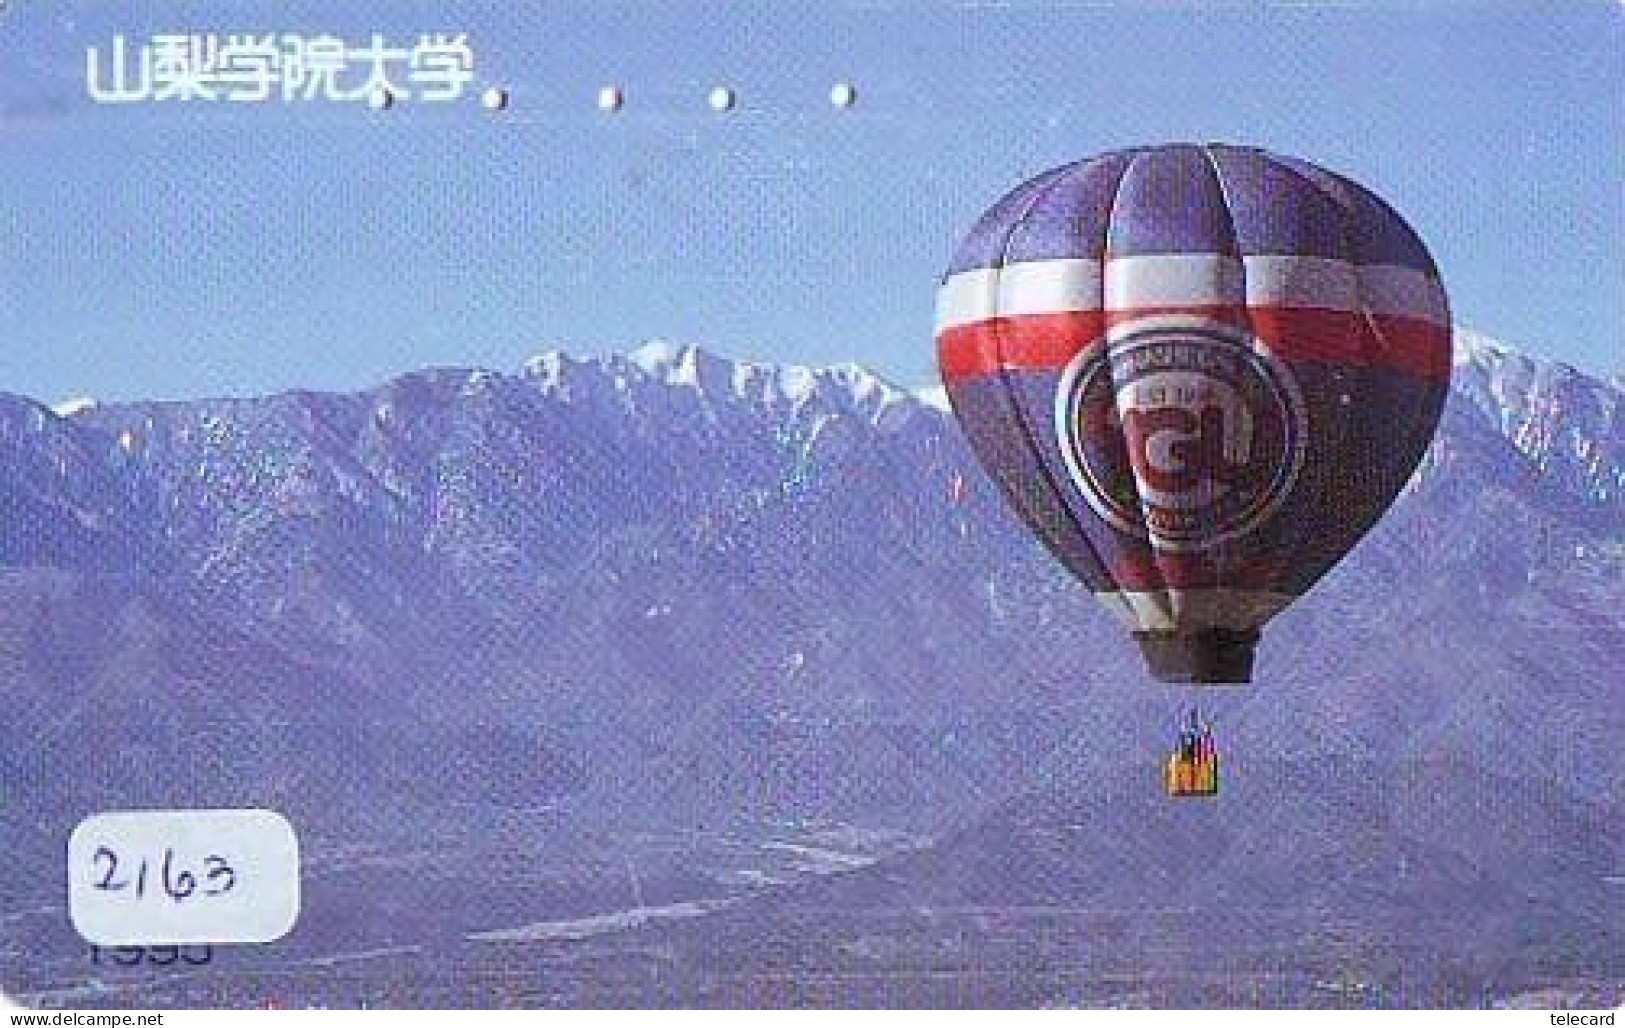 Telecarte JAPON * (2163) BALLON * MONTGOLFIERE - Hot Air Balloon * Aerostato * Heißluft PHONECARD JAPAN - - Sport